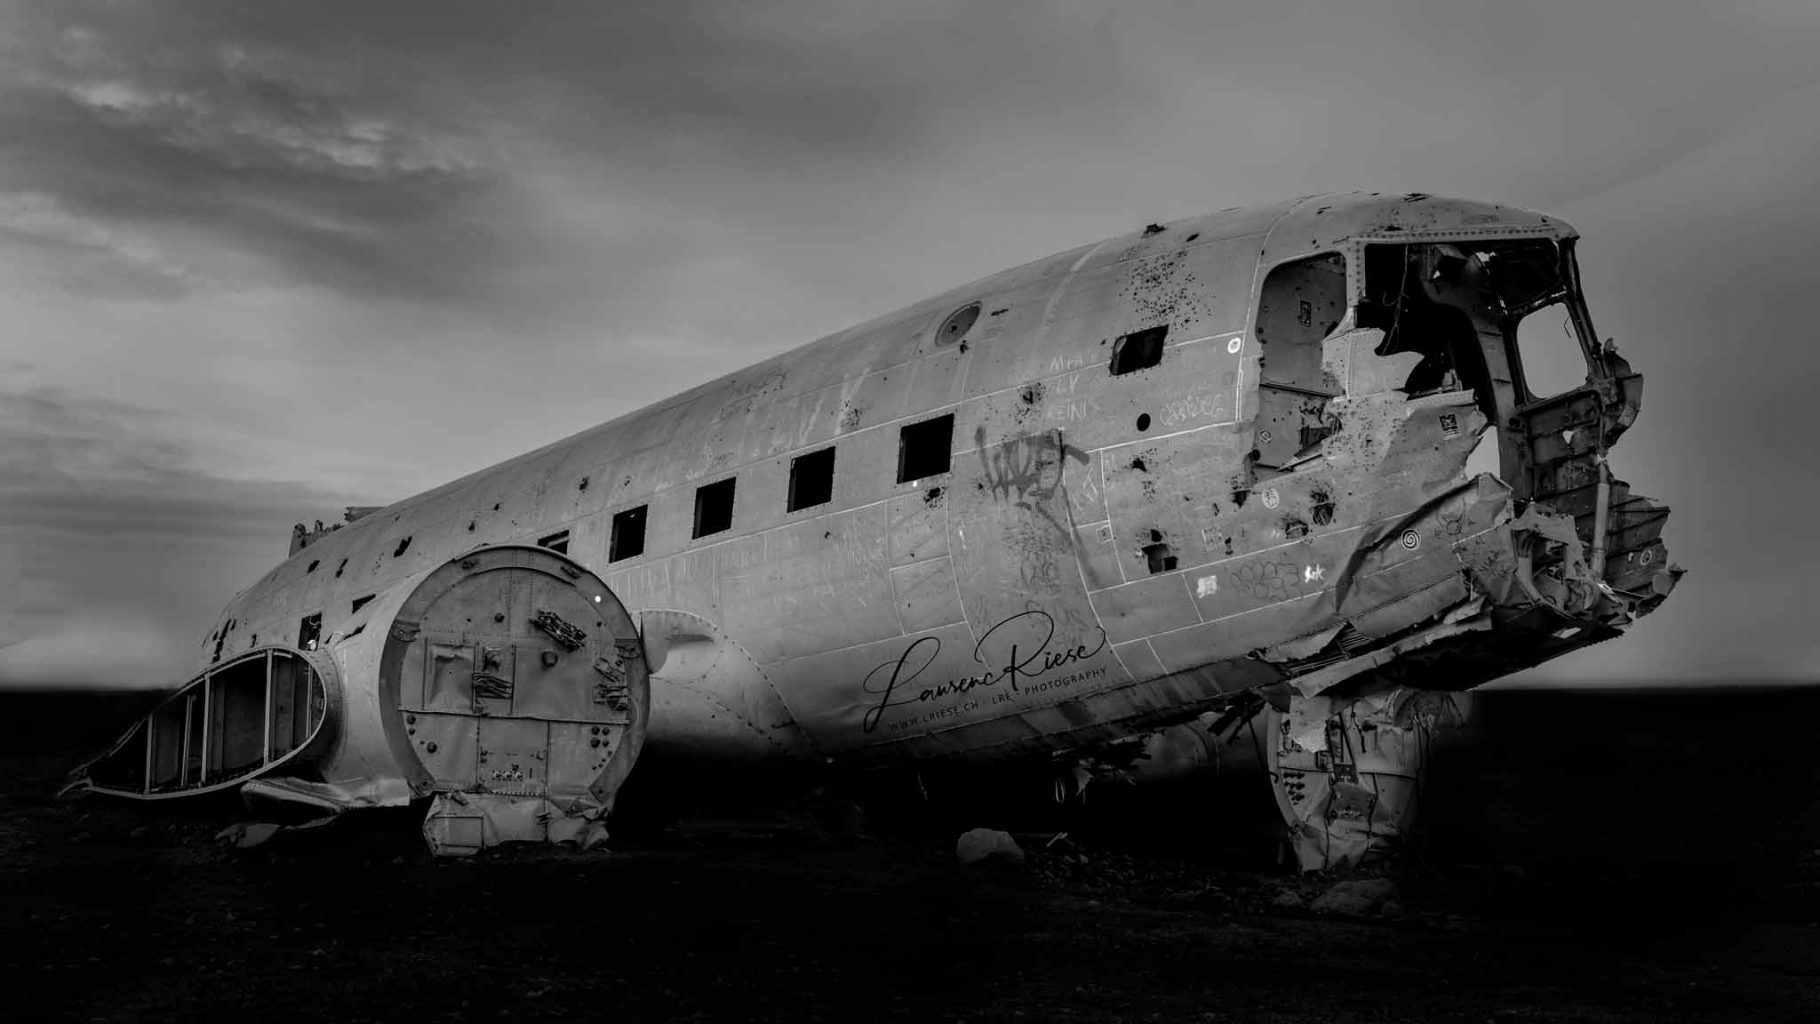 Island Flugzeugwrack